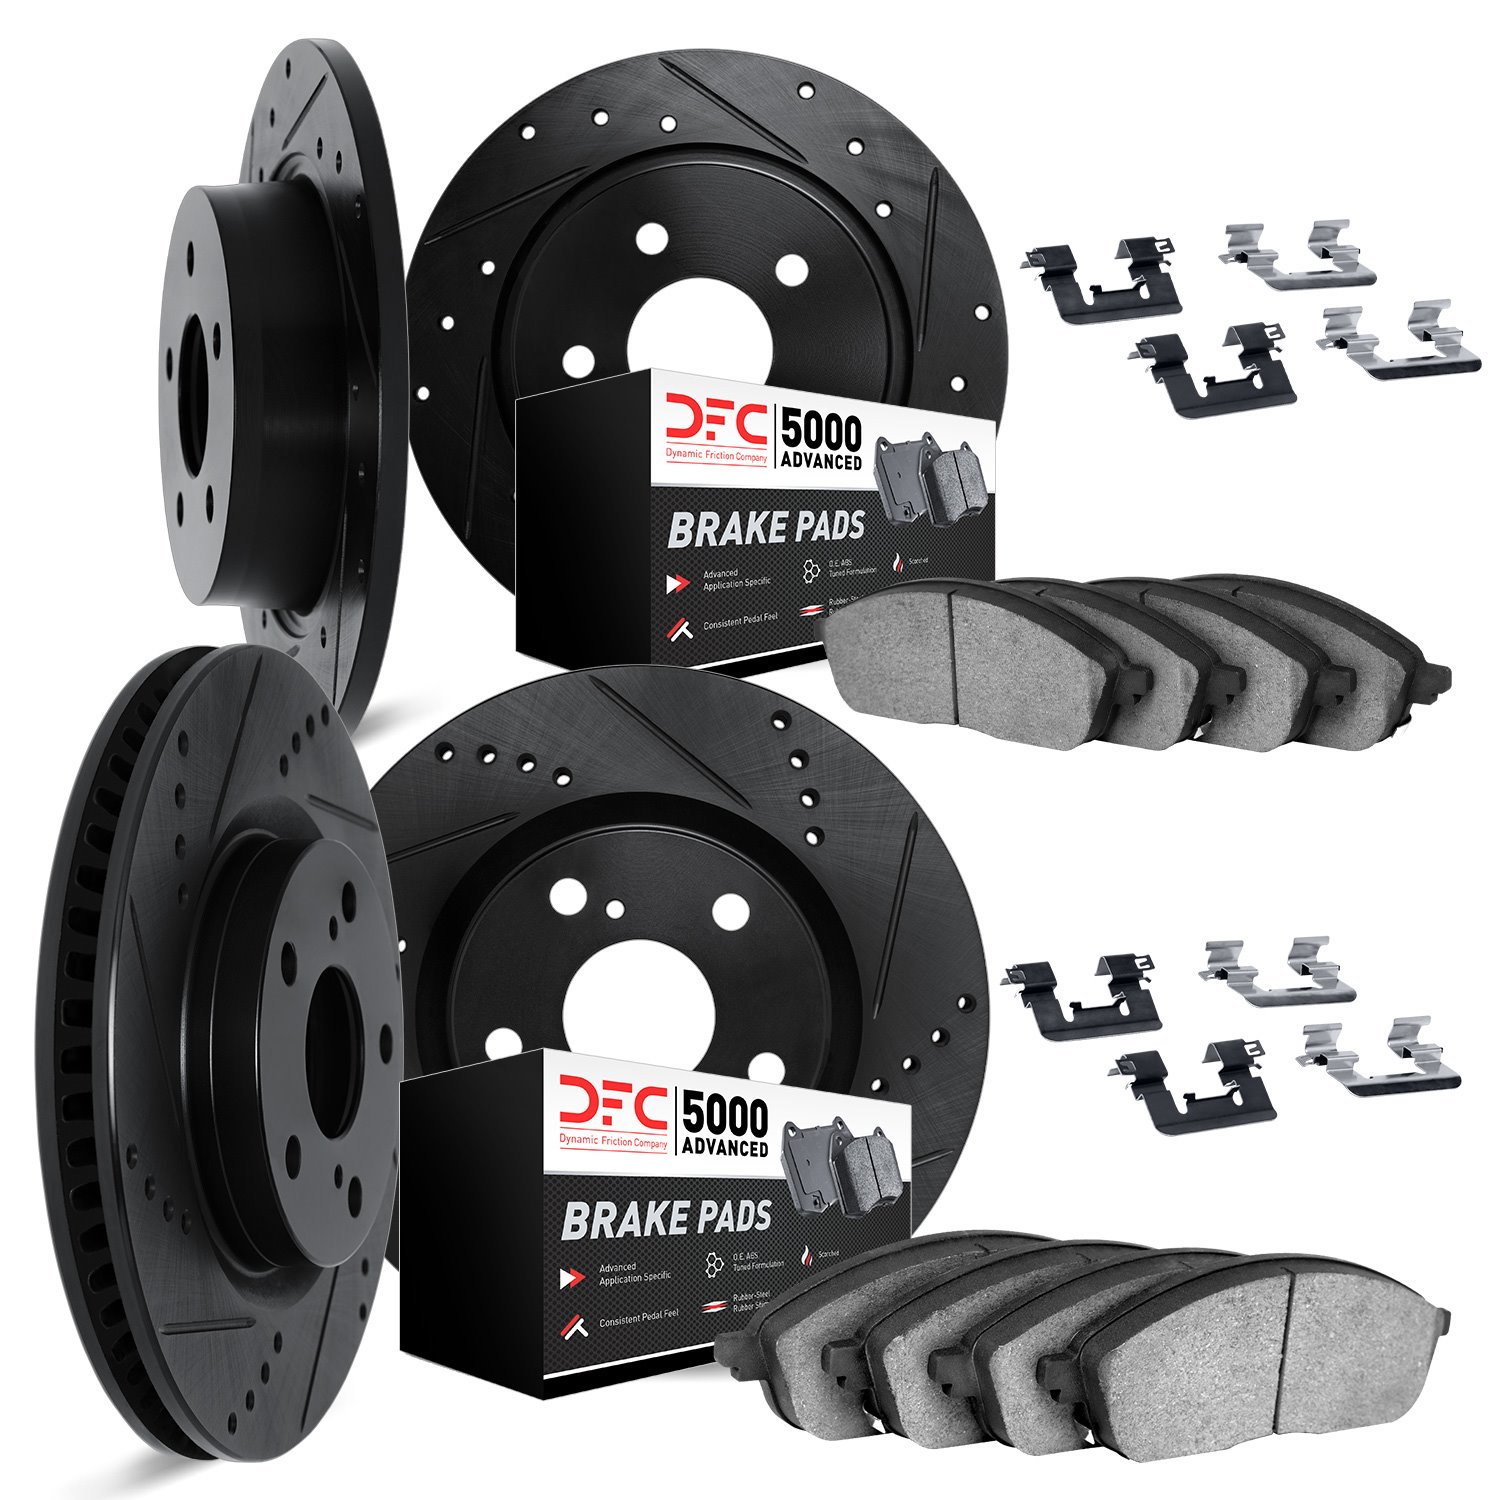 8514-55003 Drilled/Slotted Brake Rotors w/5000 Advanced Brake Pads Kit & Hardware [Black], 2015-2020 Ford/Lincoln/Mercury/Mazda,